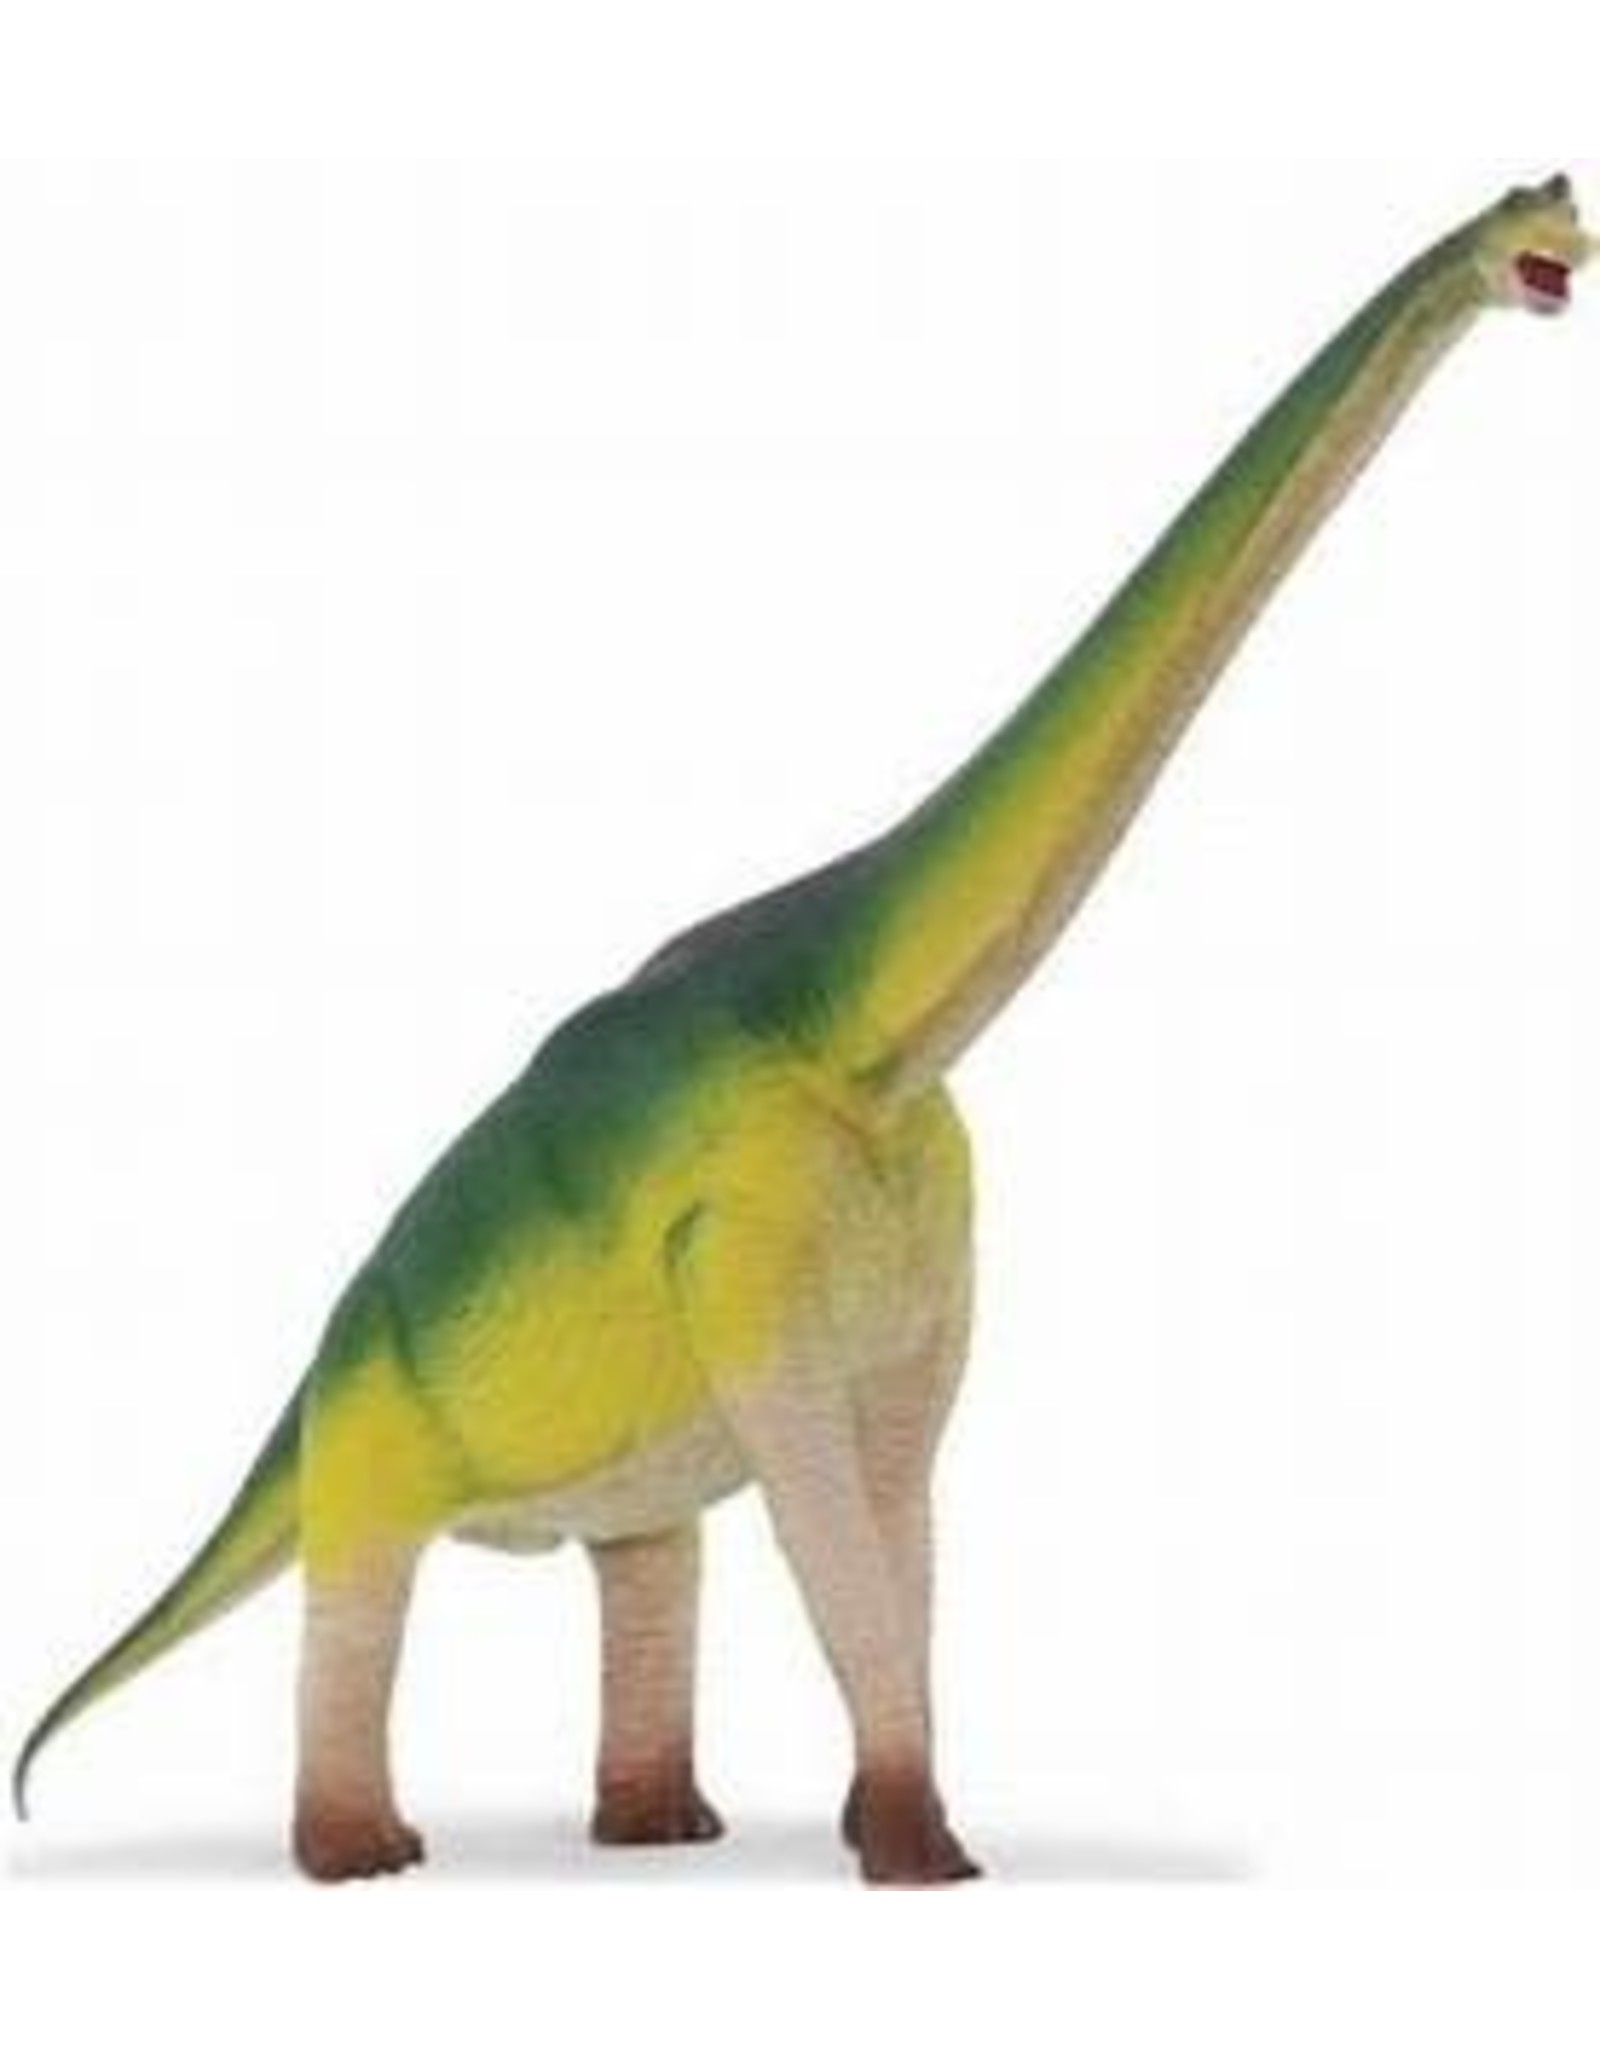 Brachiosaurus